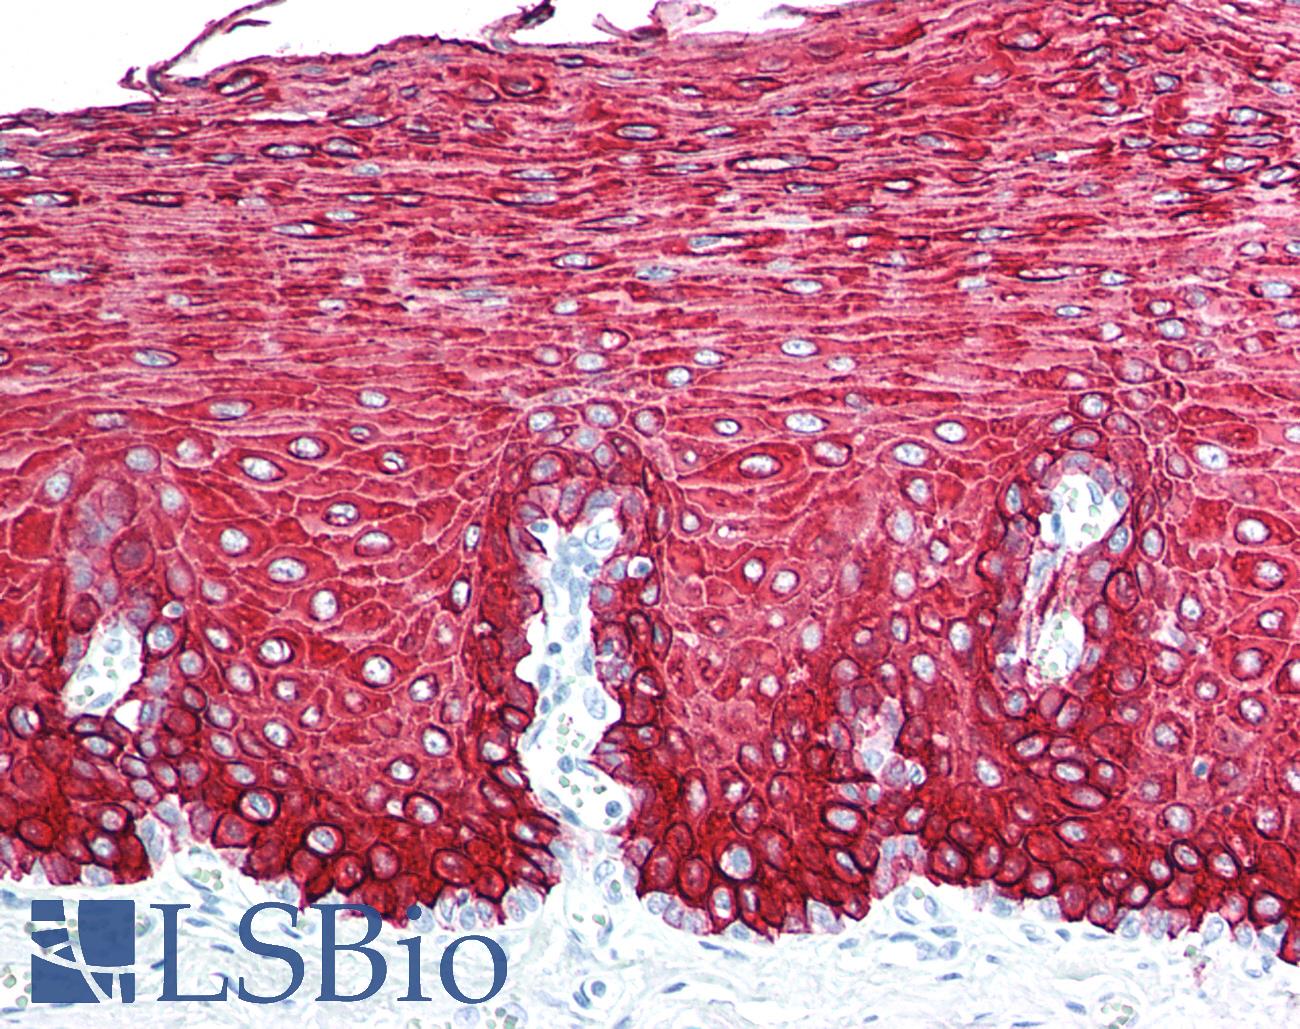 KRT13 / CK13 / Cytokeratin 13 Antibody - Human Esophagus: Formalin-Fixed, Paraffin-Embedded (FFPE)